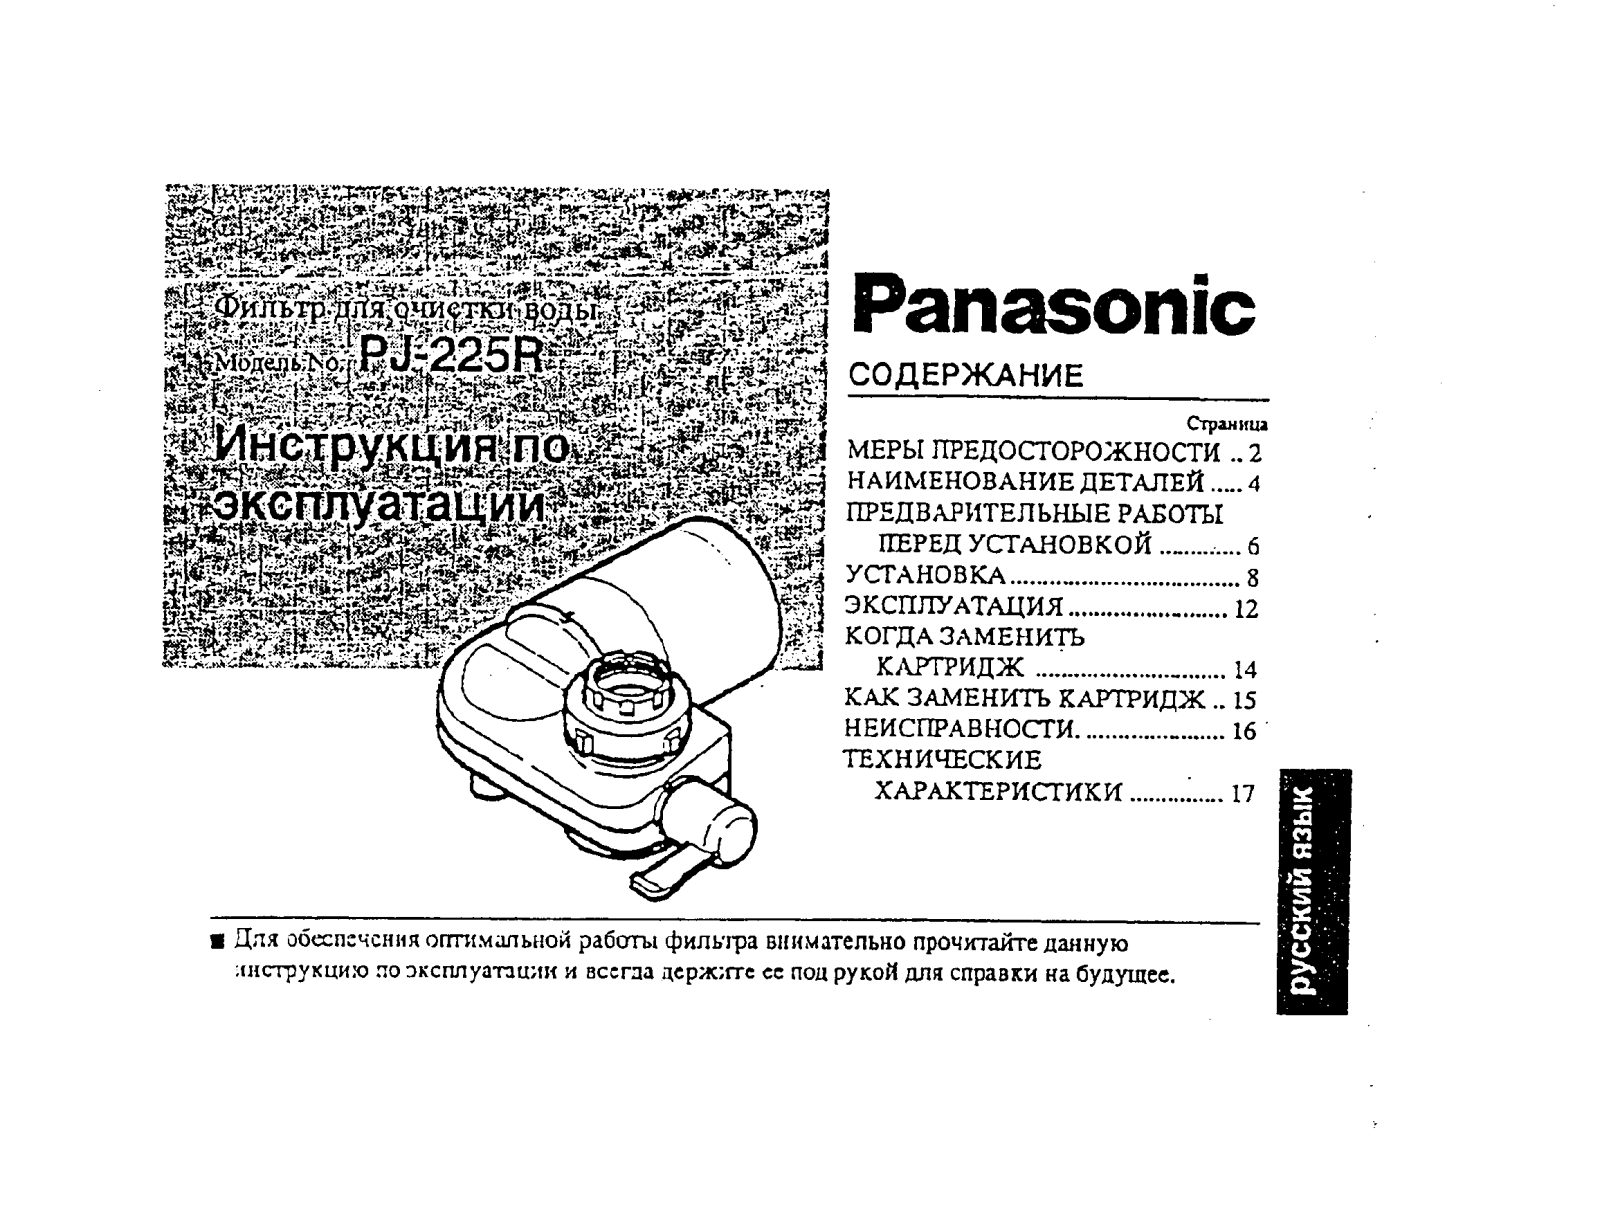 Panasonic PJ-225R User Manual